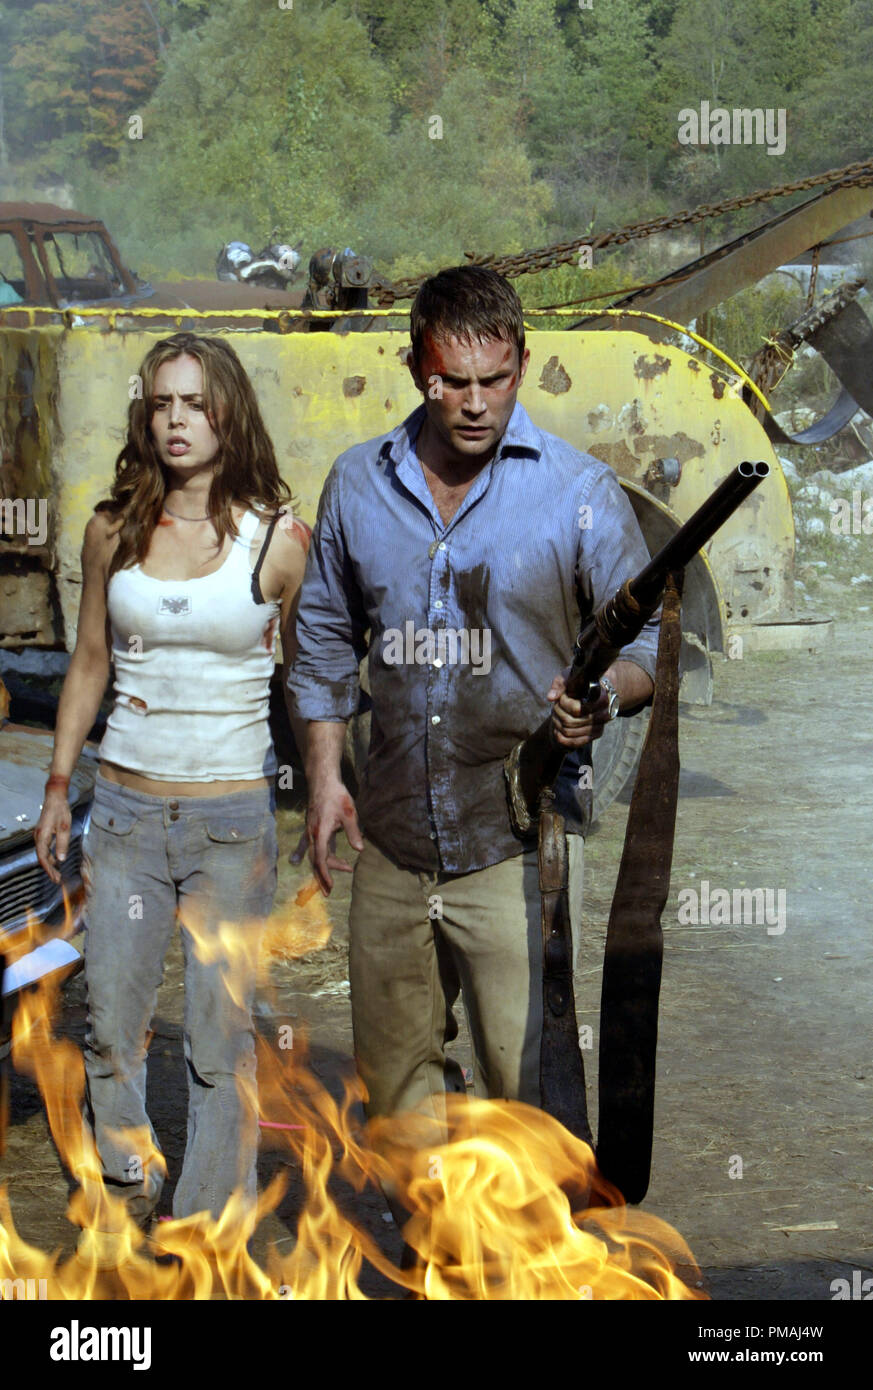 Jessie (Eliza Dushku) y Chris (Desmond Harrington) actuar contra una terrible amenaza. "Wrong Turn" (2003) Foto de stock